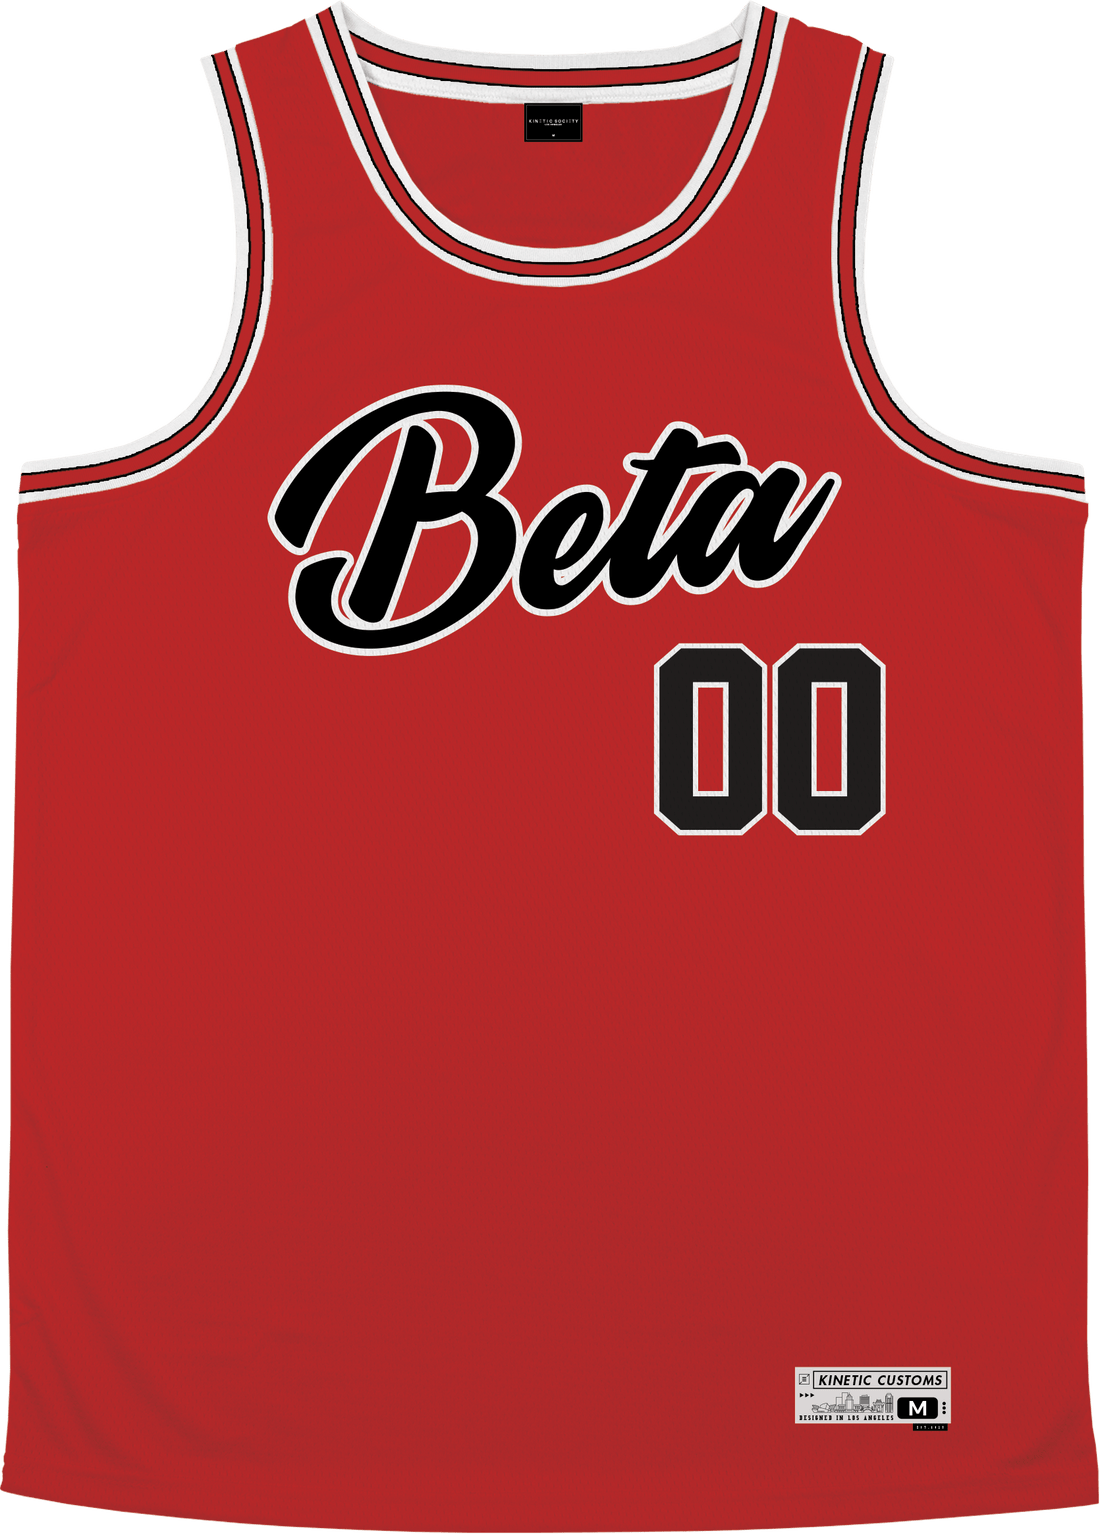 Beta Theta Pi - Big Red Basketball Jersey – Kinetic Society LLC